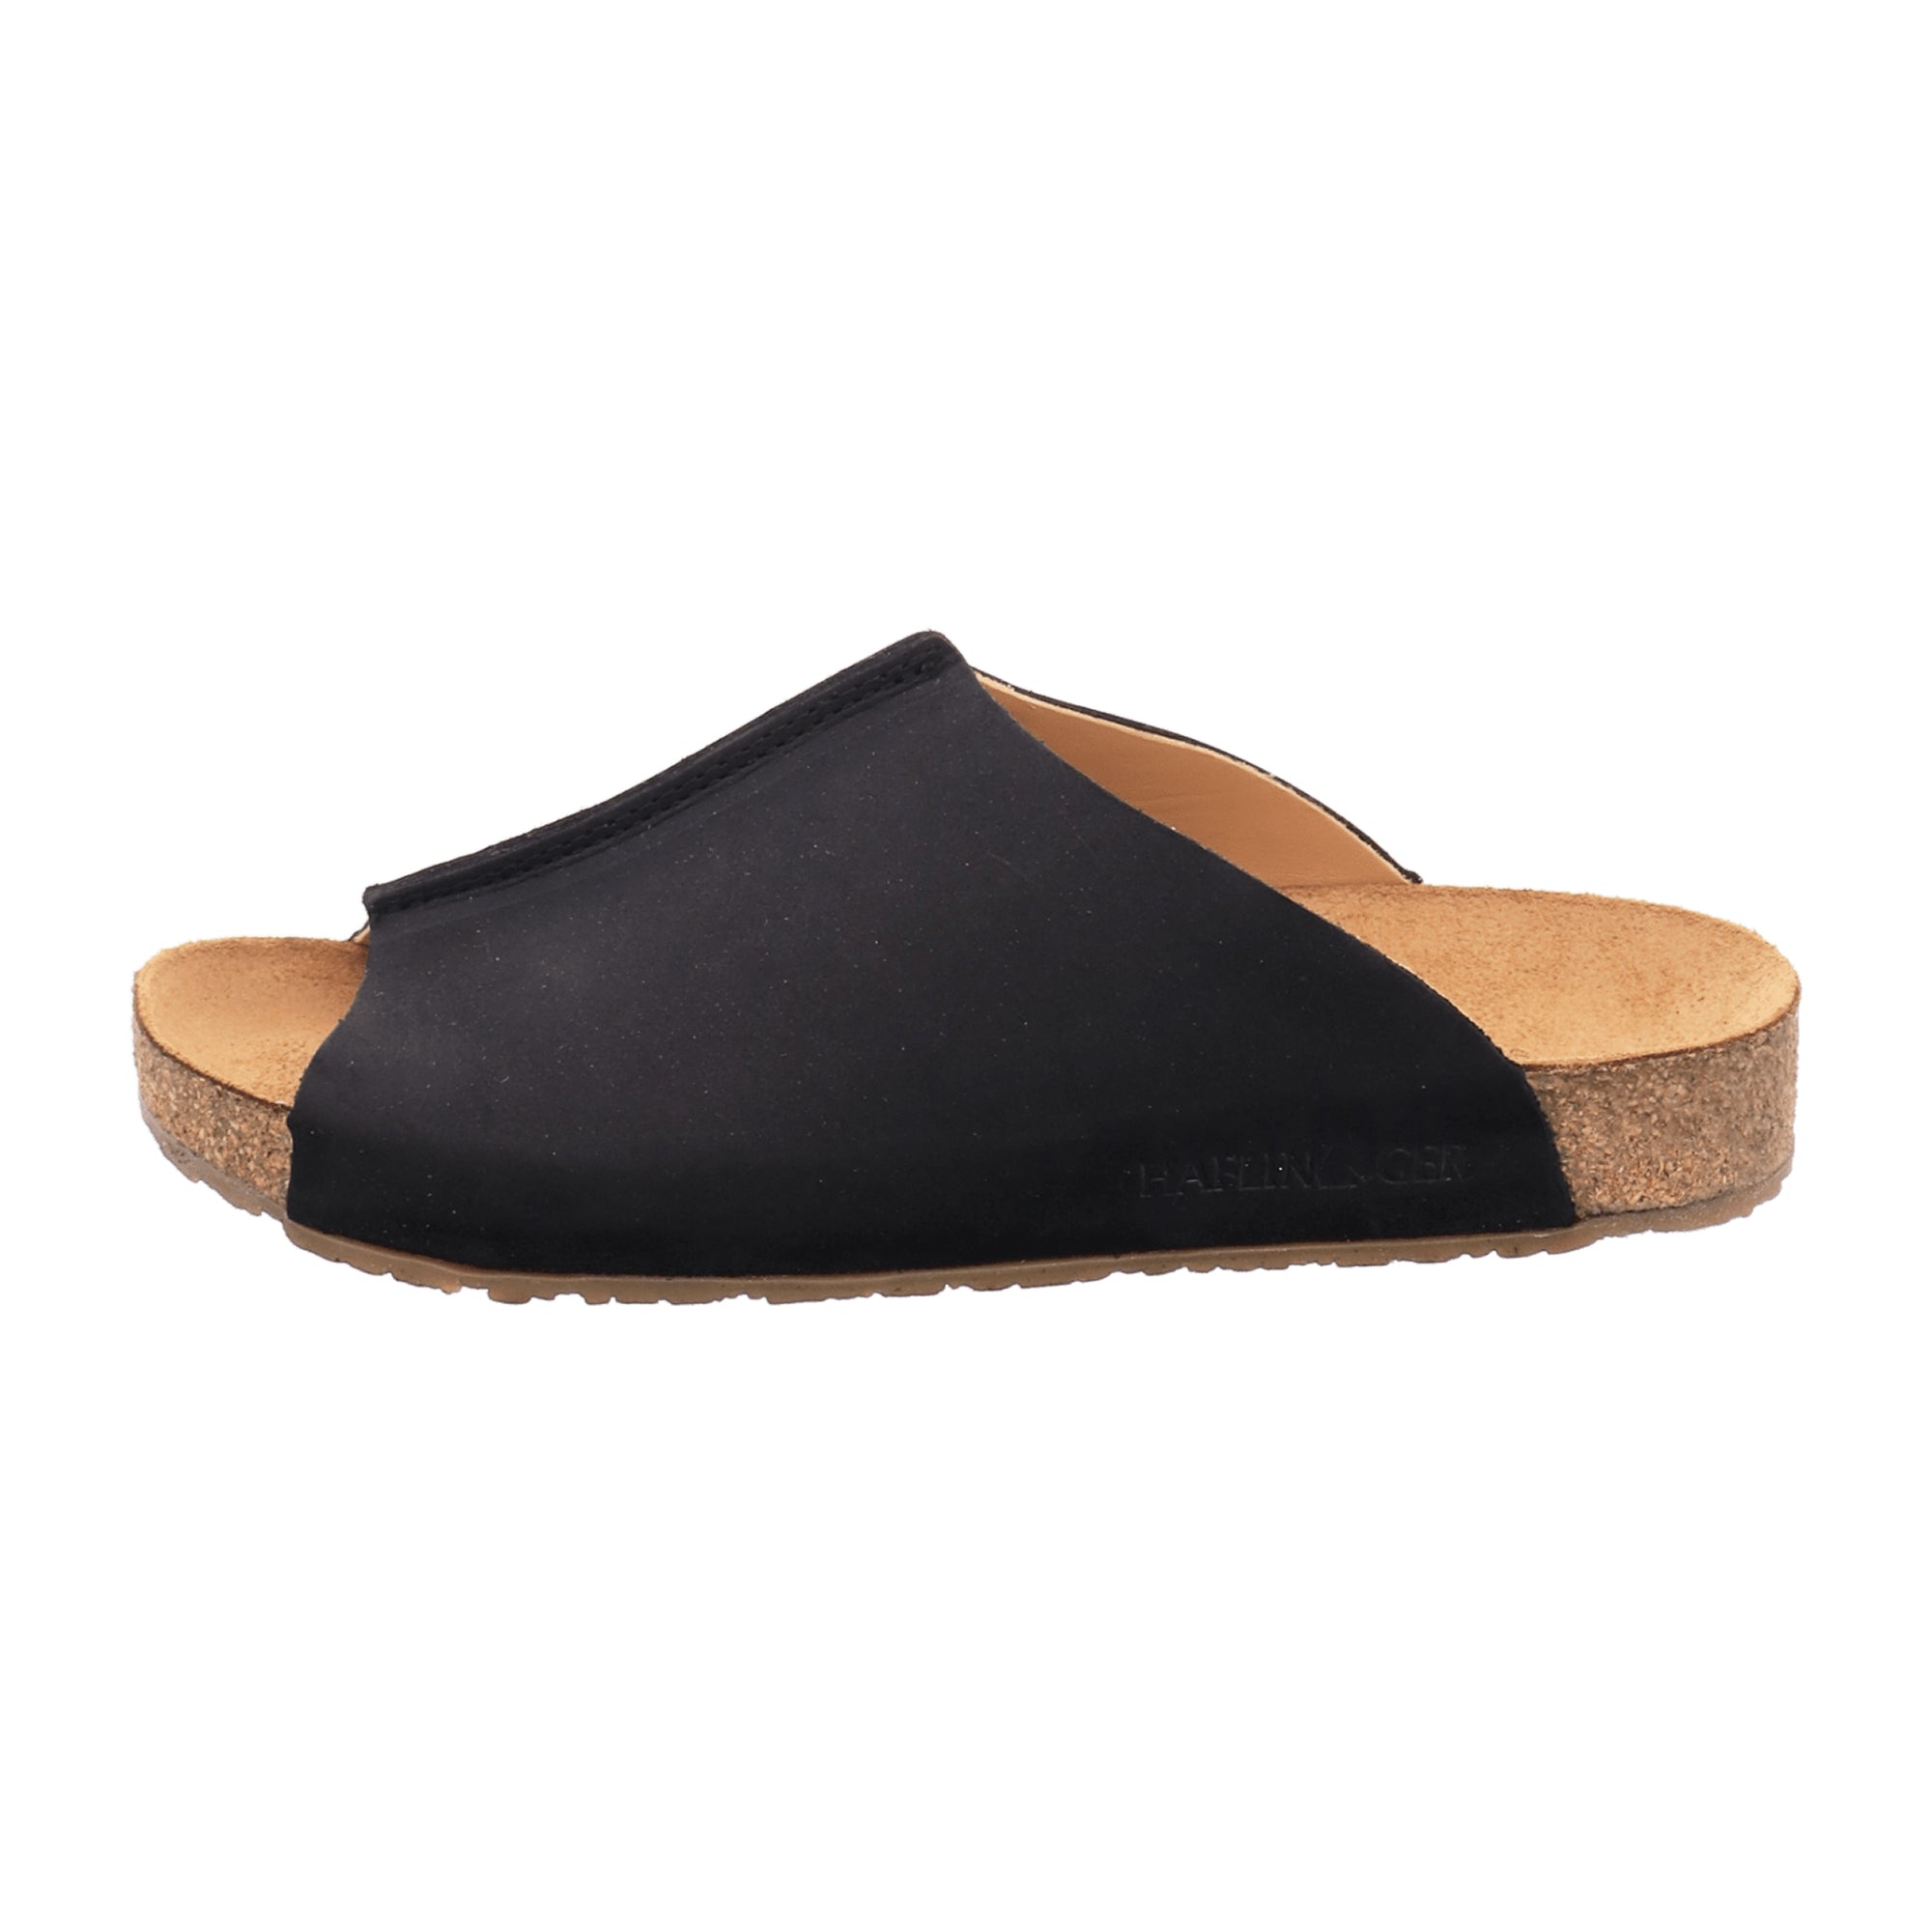 Haflinger Bio Fortuna Women's Sandals, Stylish & Eco-Friendly, Black